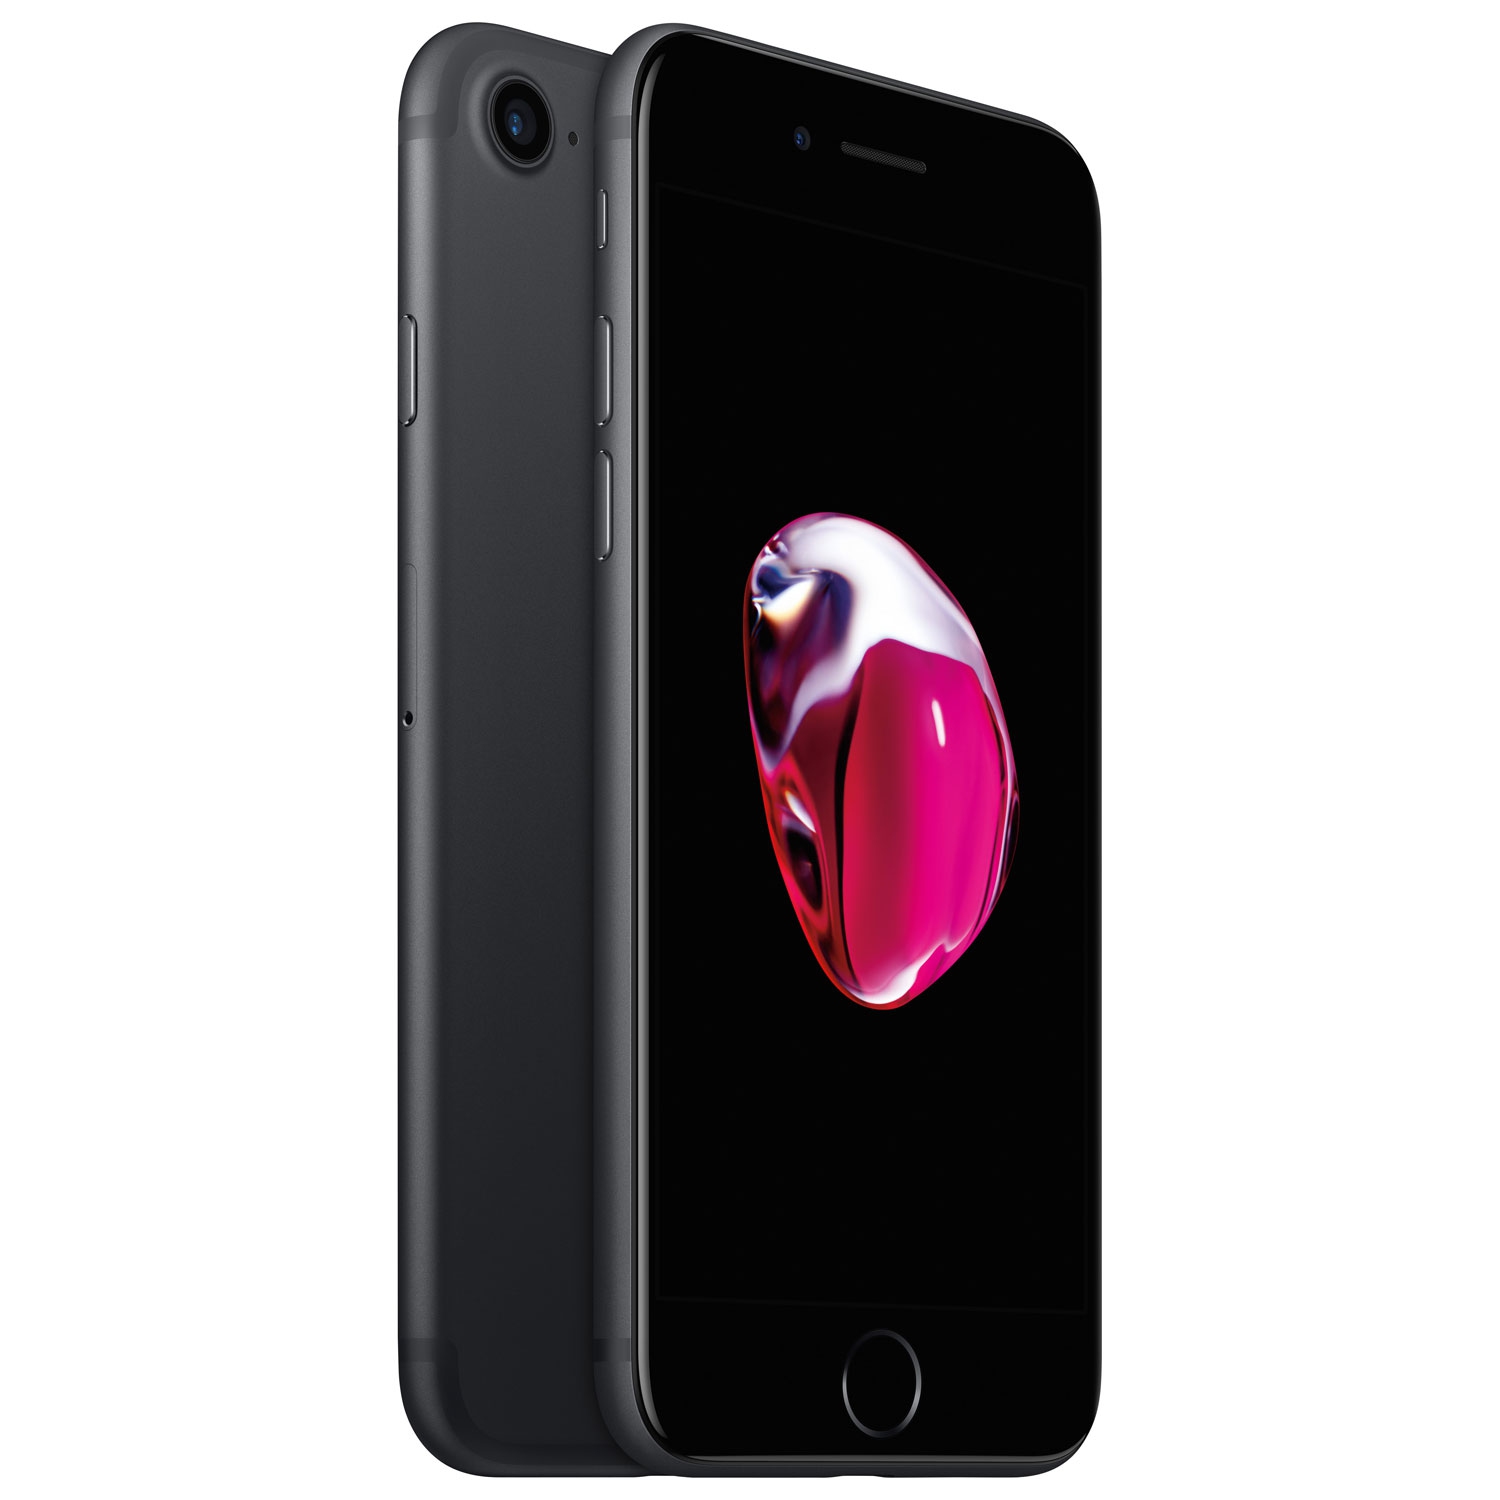 Refurbished (Excellent) - Apple iPhone 7 32GB Smartphone - Black - Unlocked - Certified Refurbished